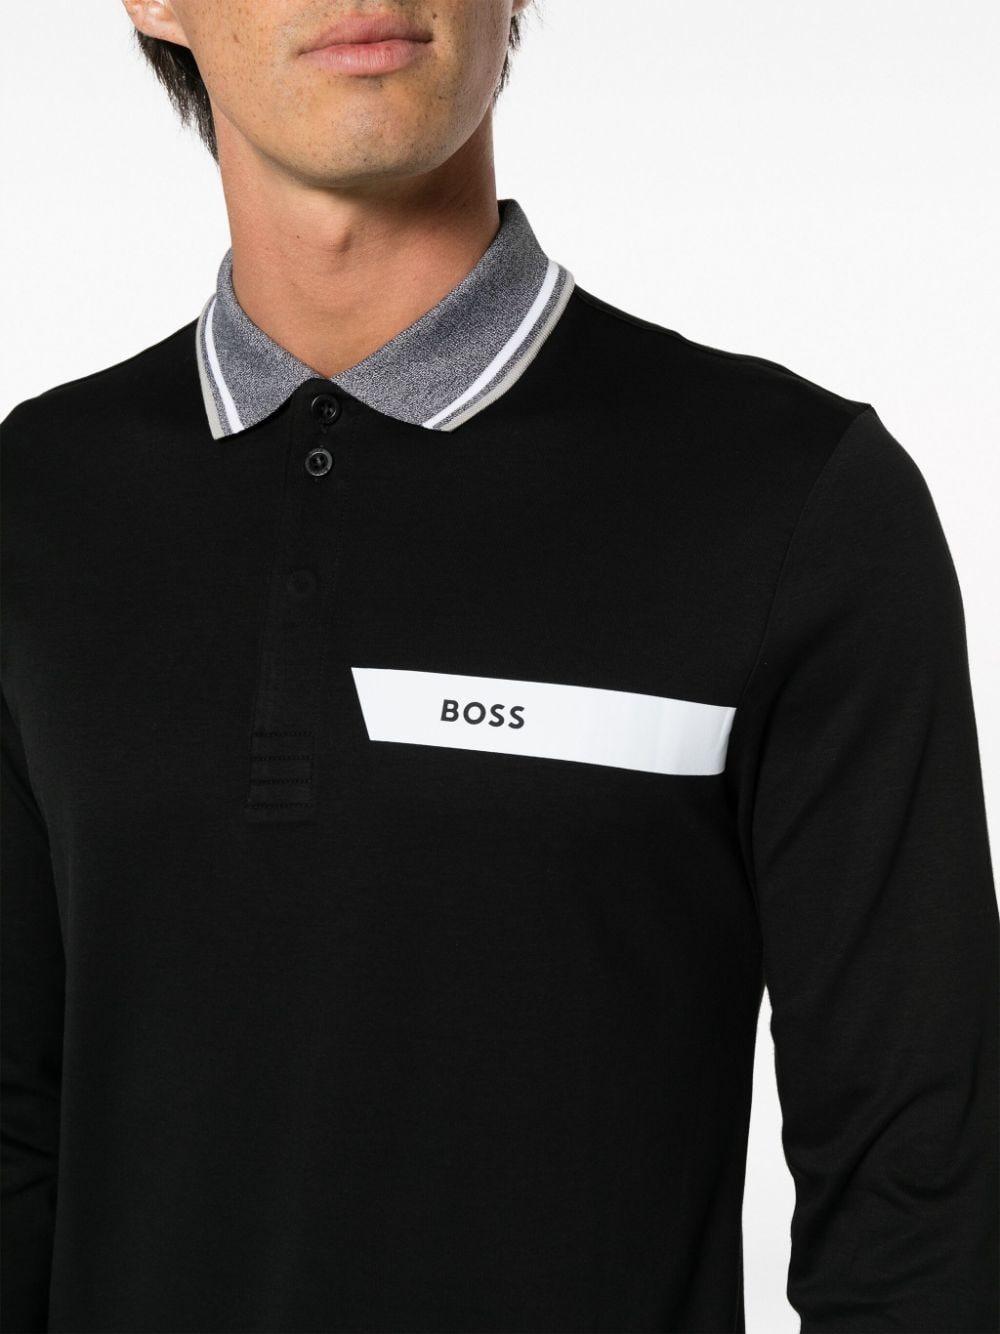 BOSS by HUGO BOSS Long-sleeve Cotton Polo Shirt in Black for Men | Lyst UK